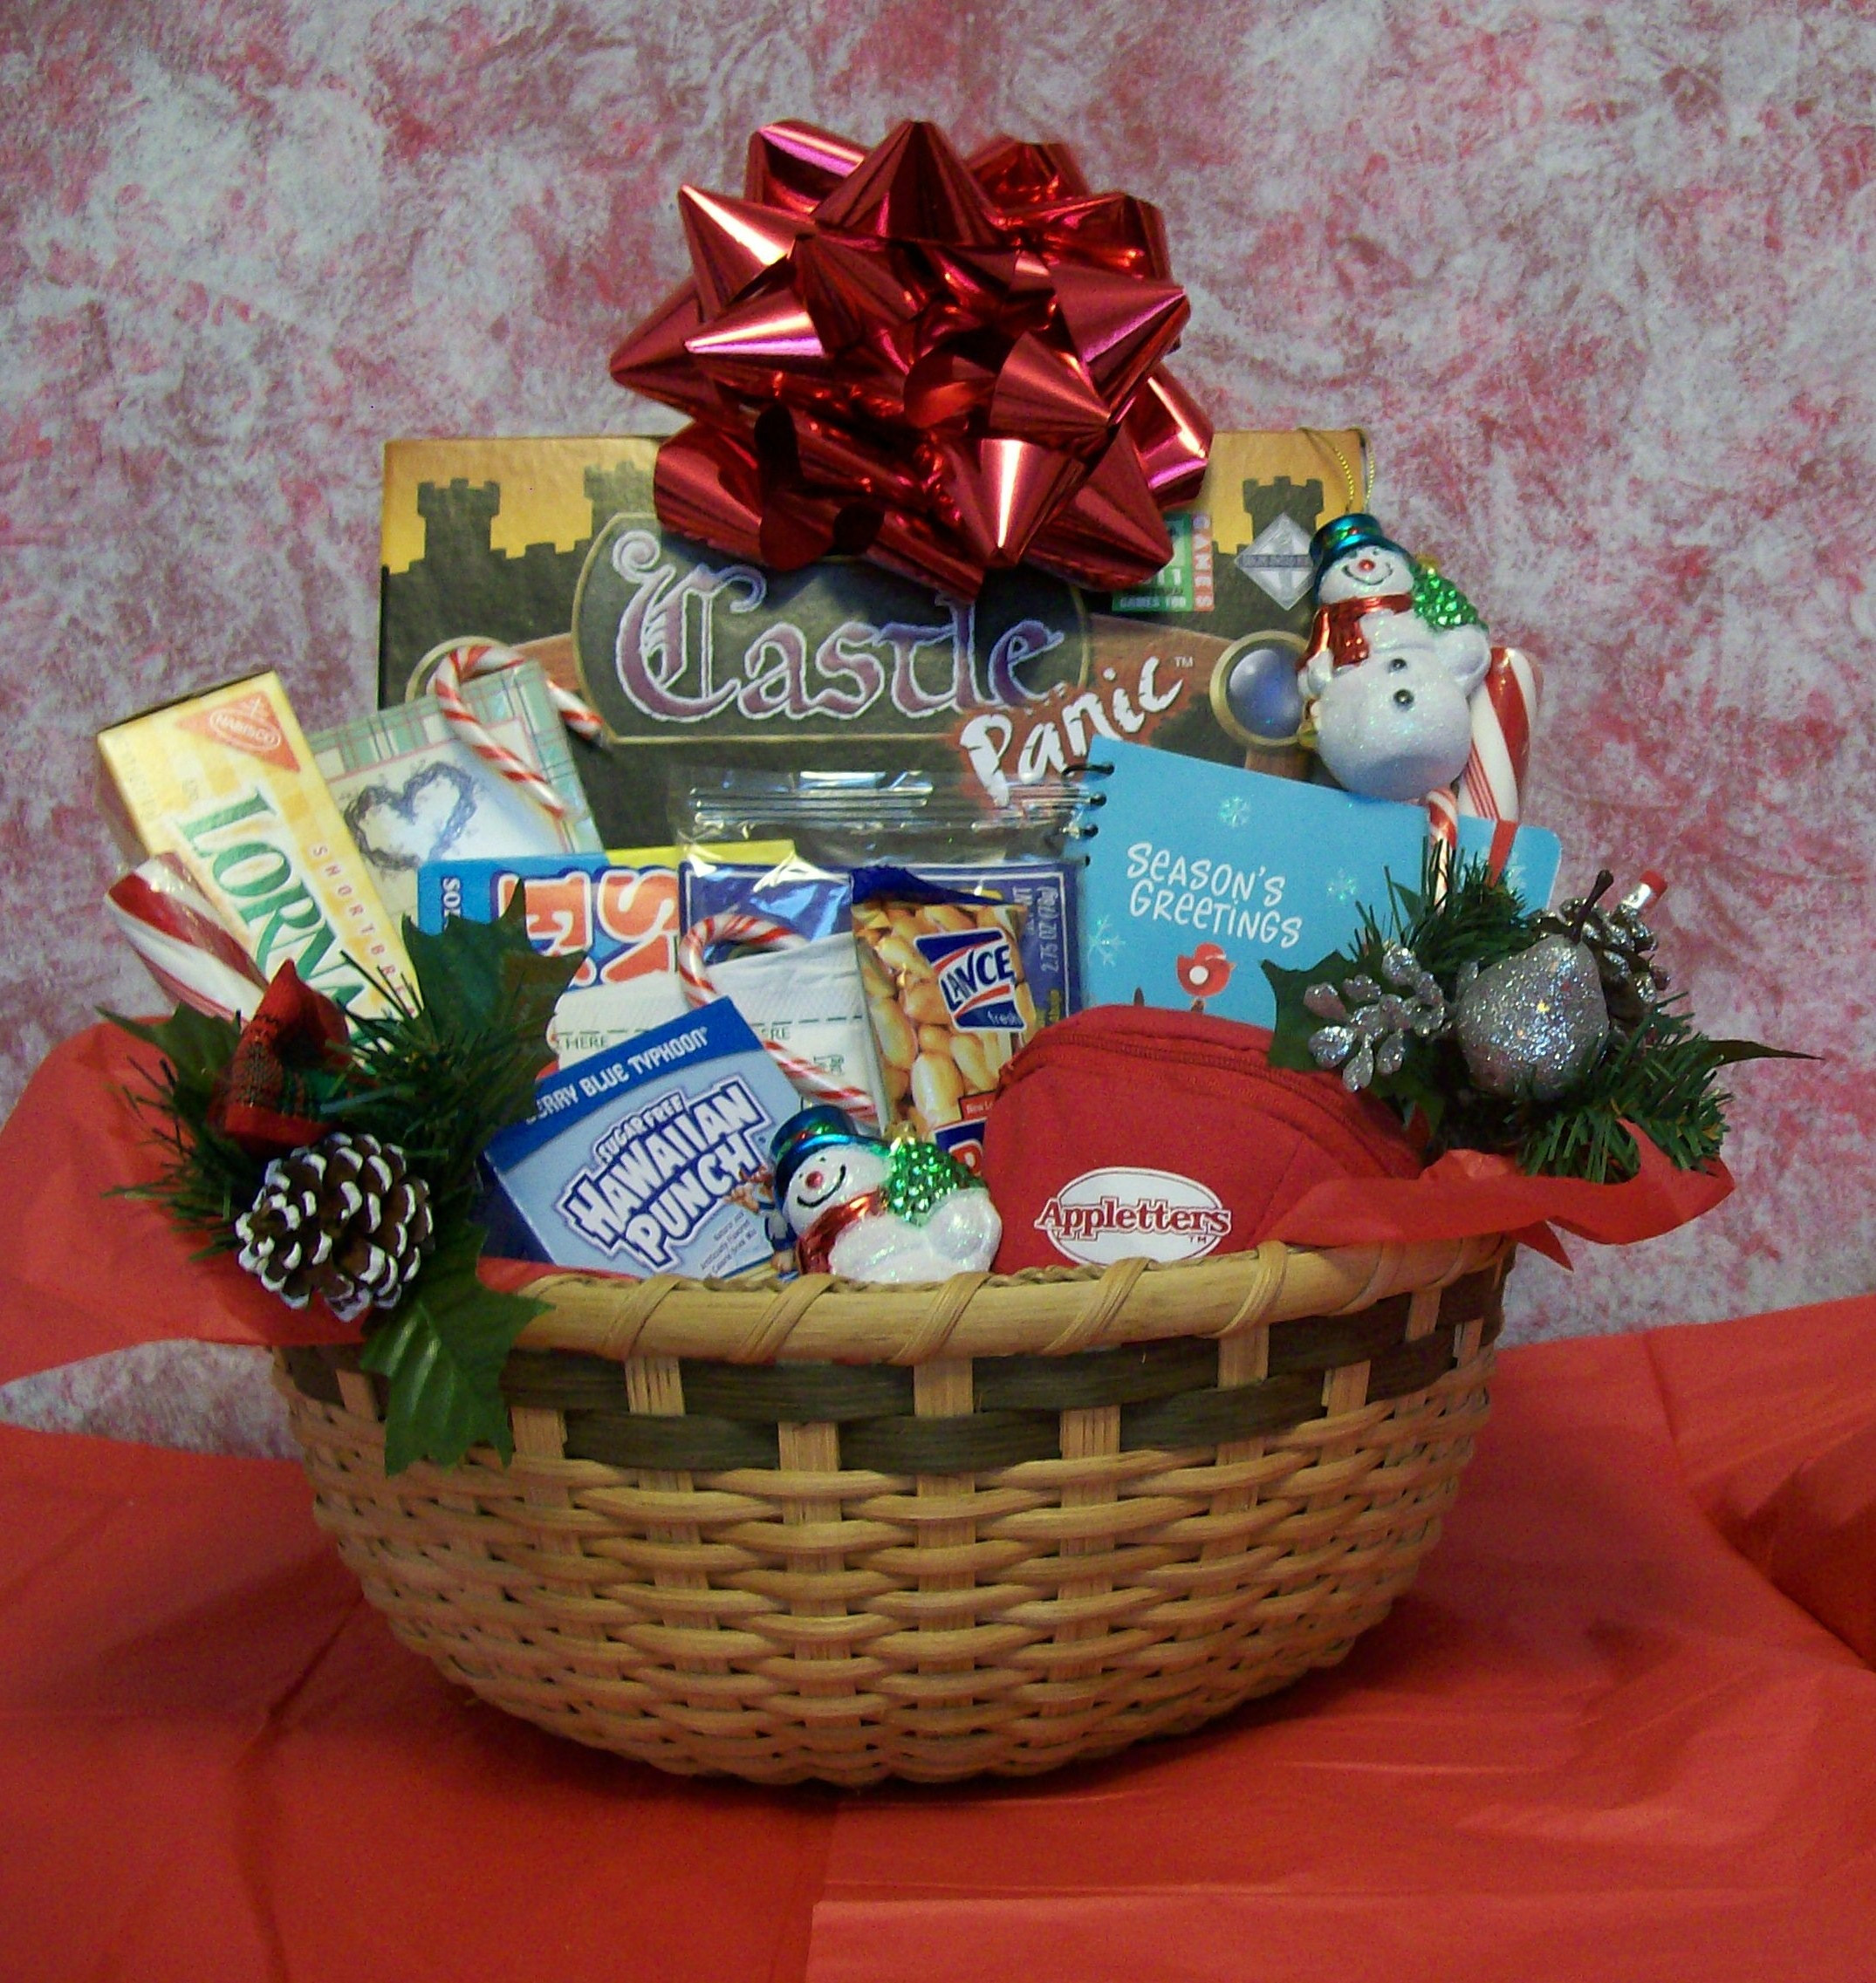 Family Christmas Gift Basket Ideas
 Family Gift Ideas For Christmas